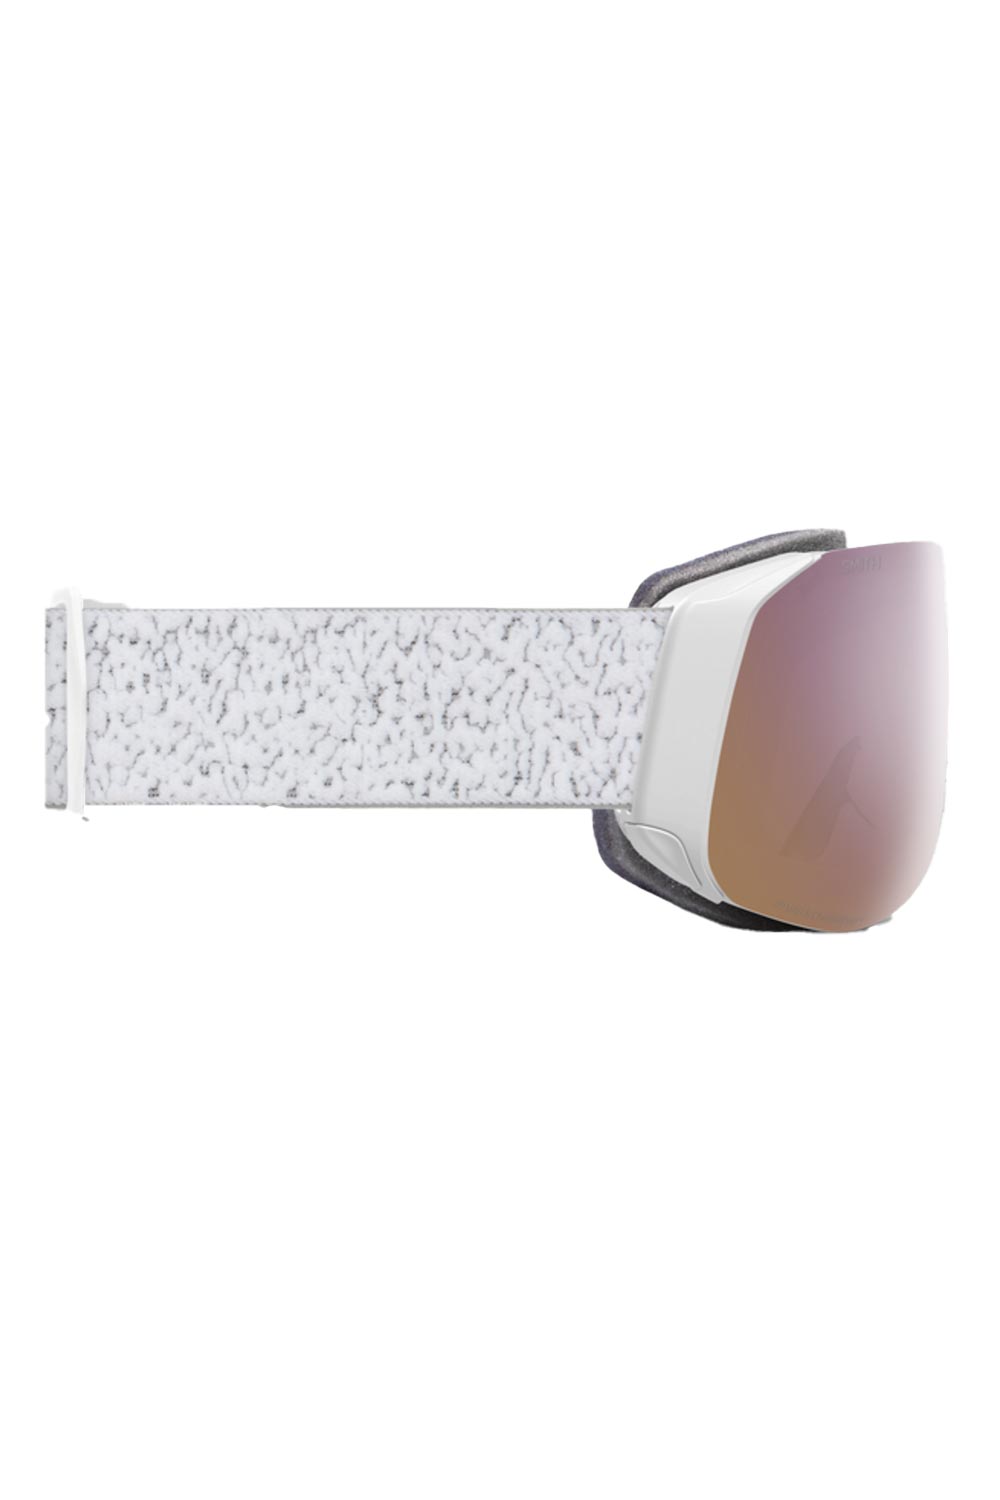 Smith 4D Mag S ski goggles, white strap rose gold lens